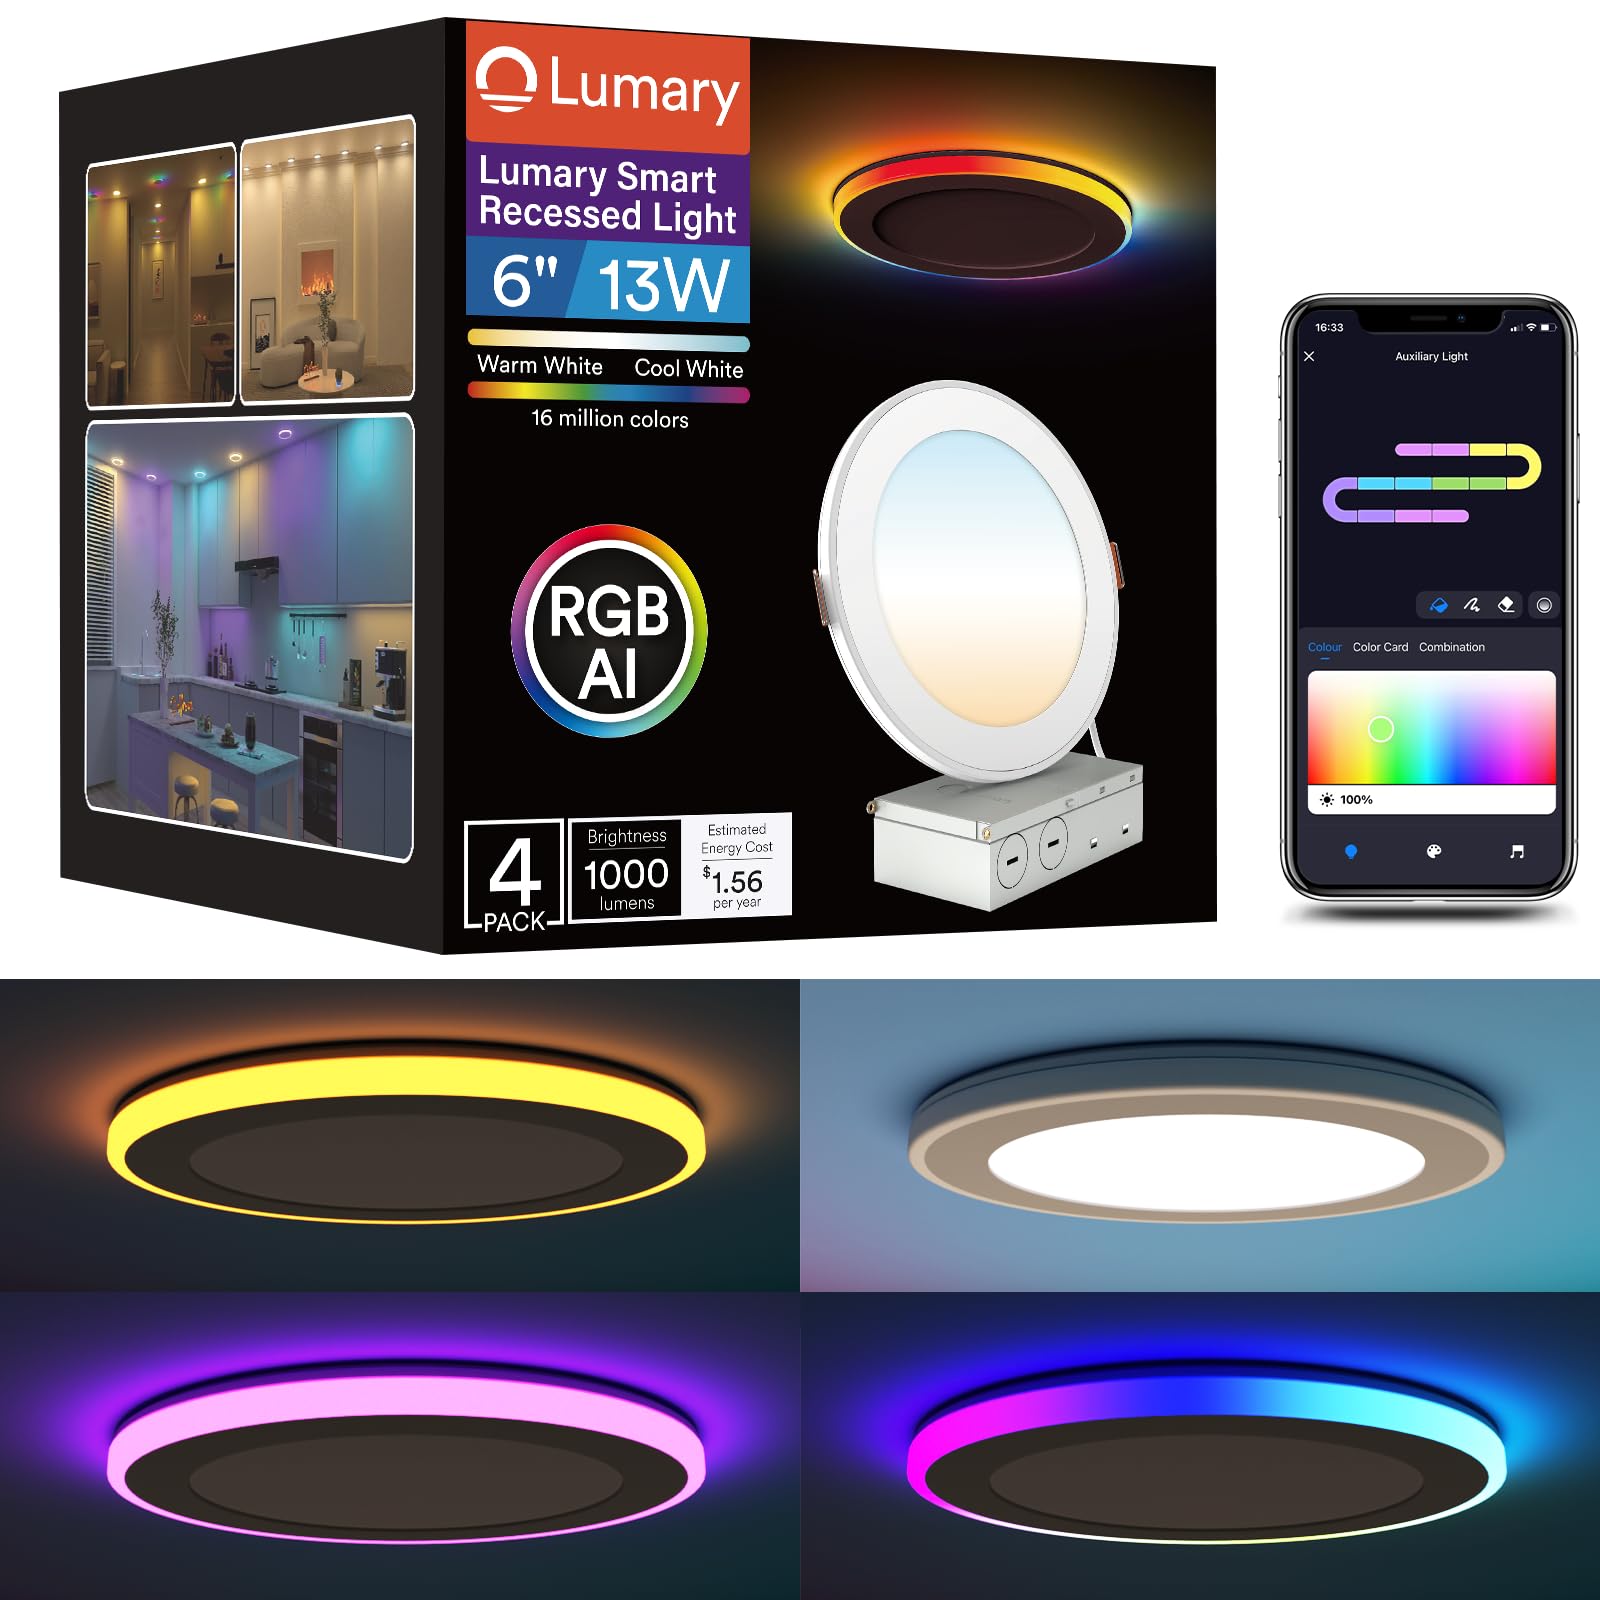 Lumary 6 inch Smart RGBAI Recessed Light with Gradient Auxiliary Night Light